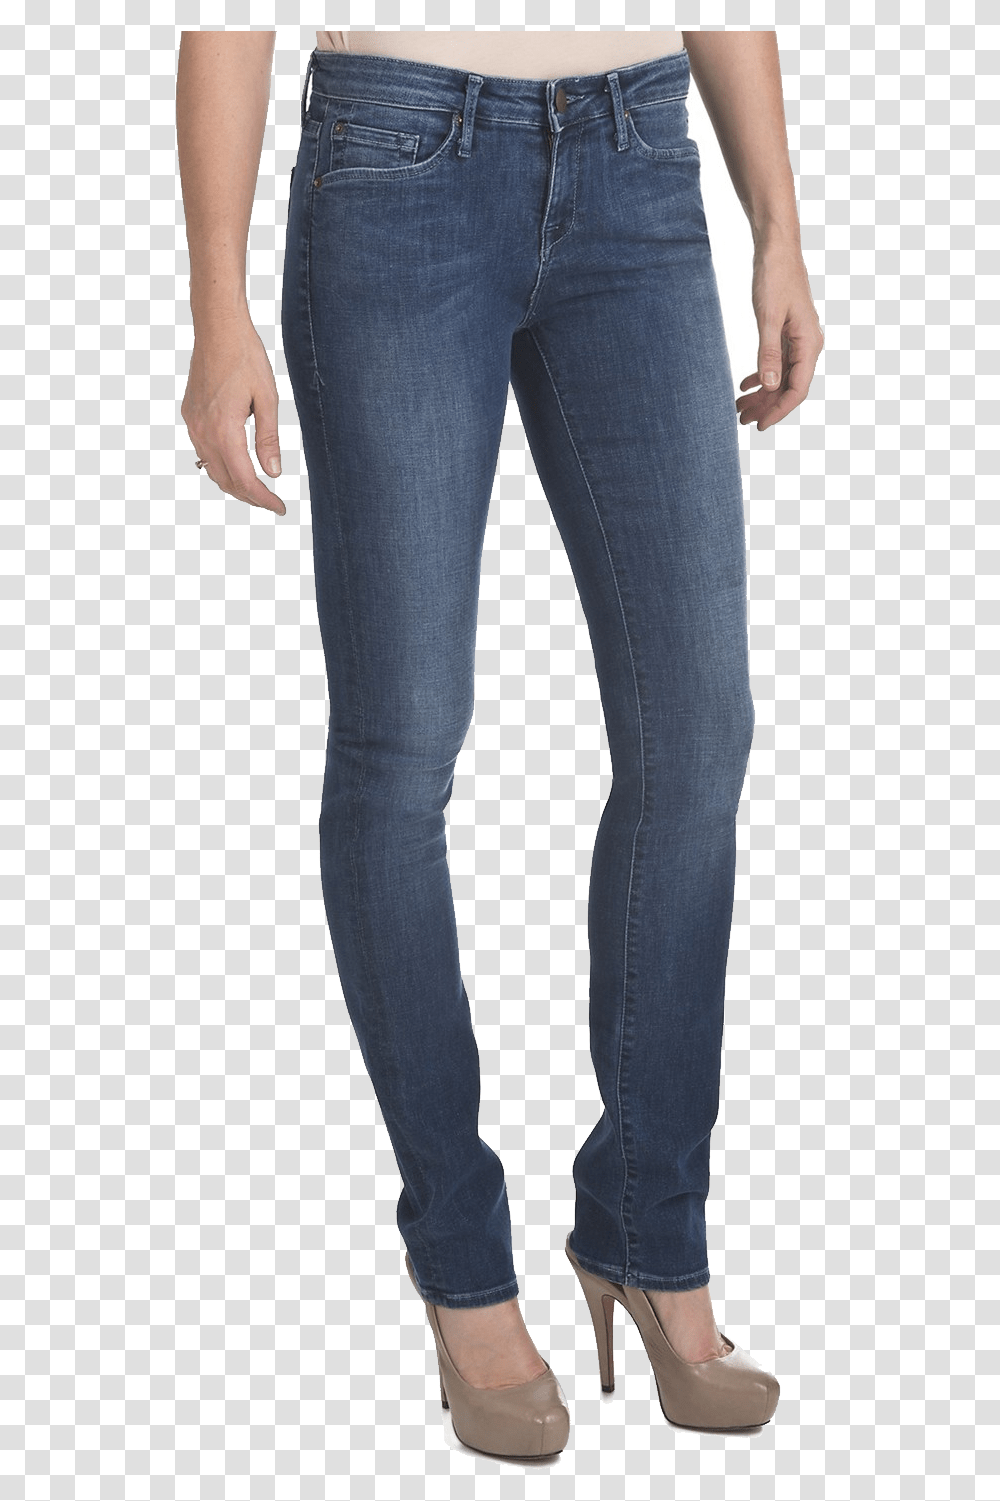 Women Jeans Image Legs With Pants, Apparel, Denim, Person Transparent Png